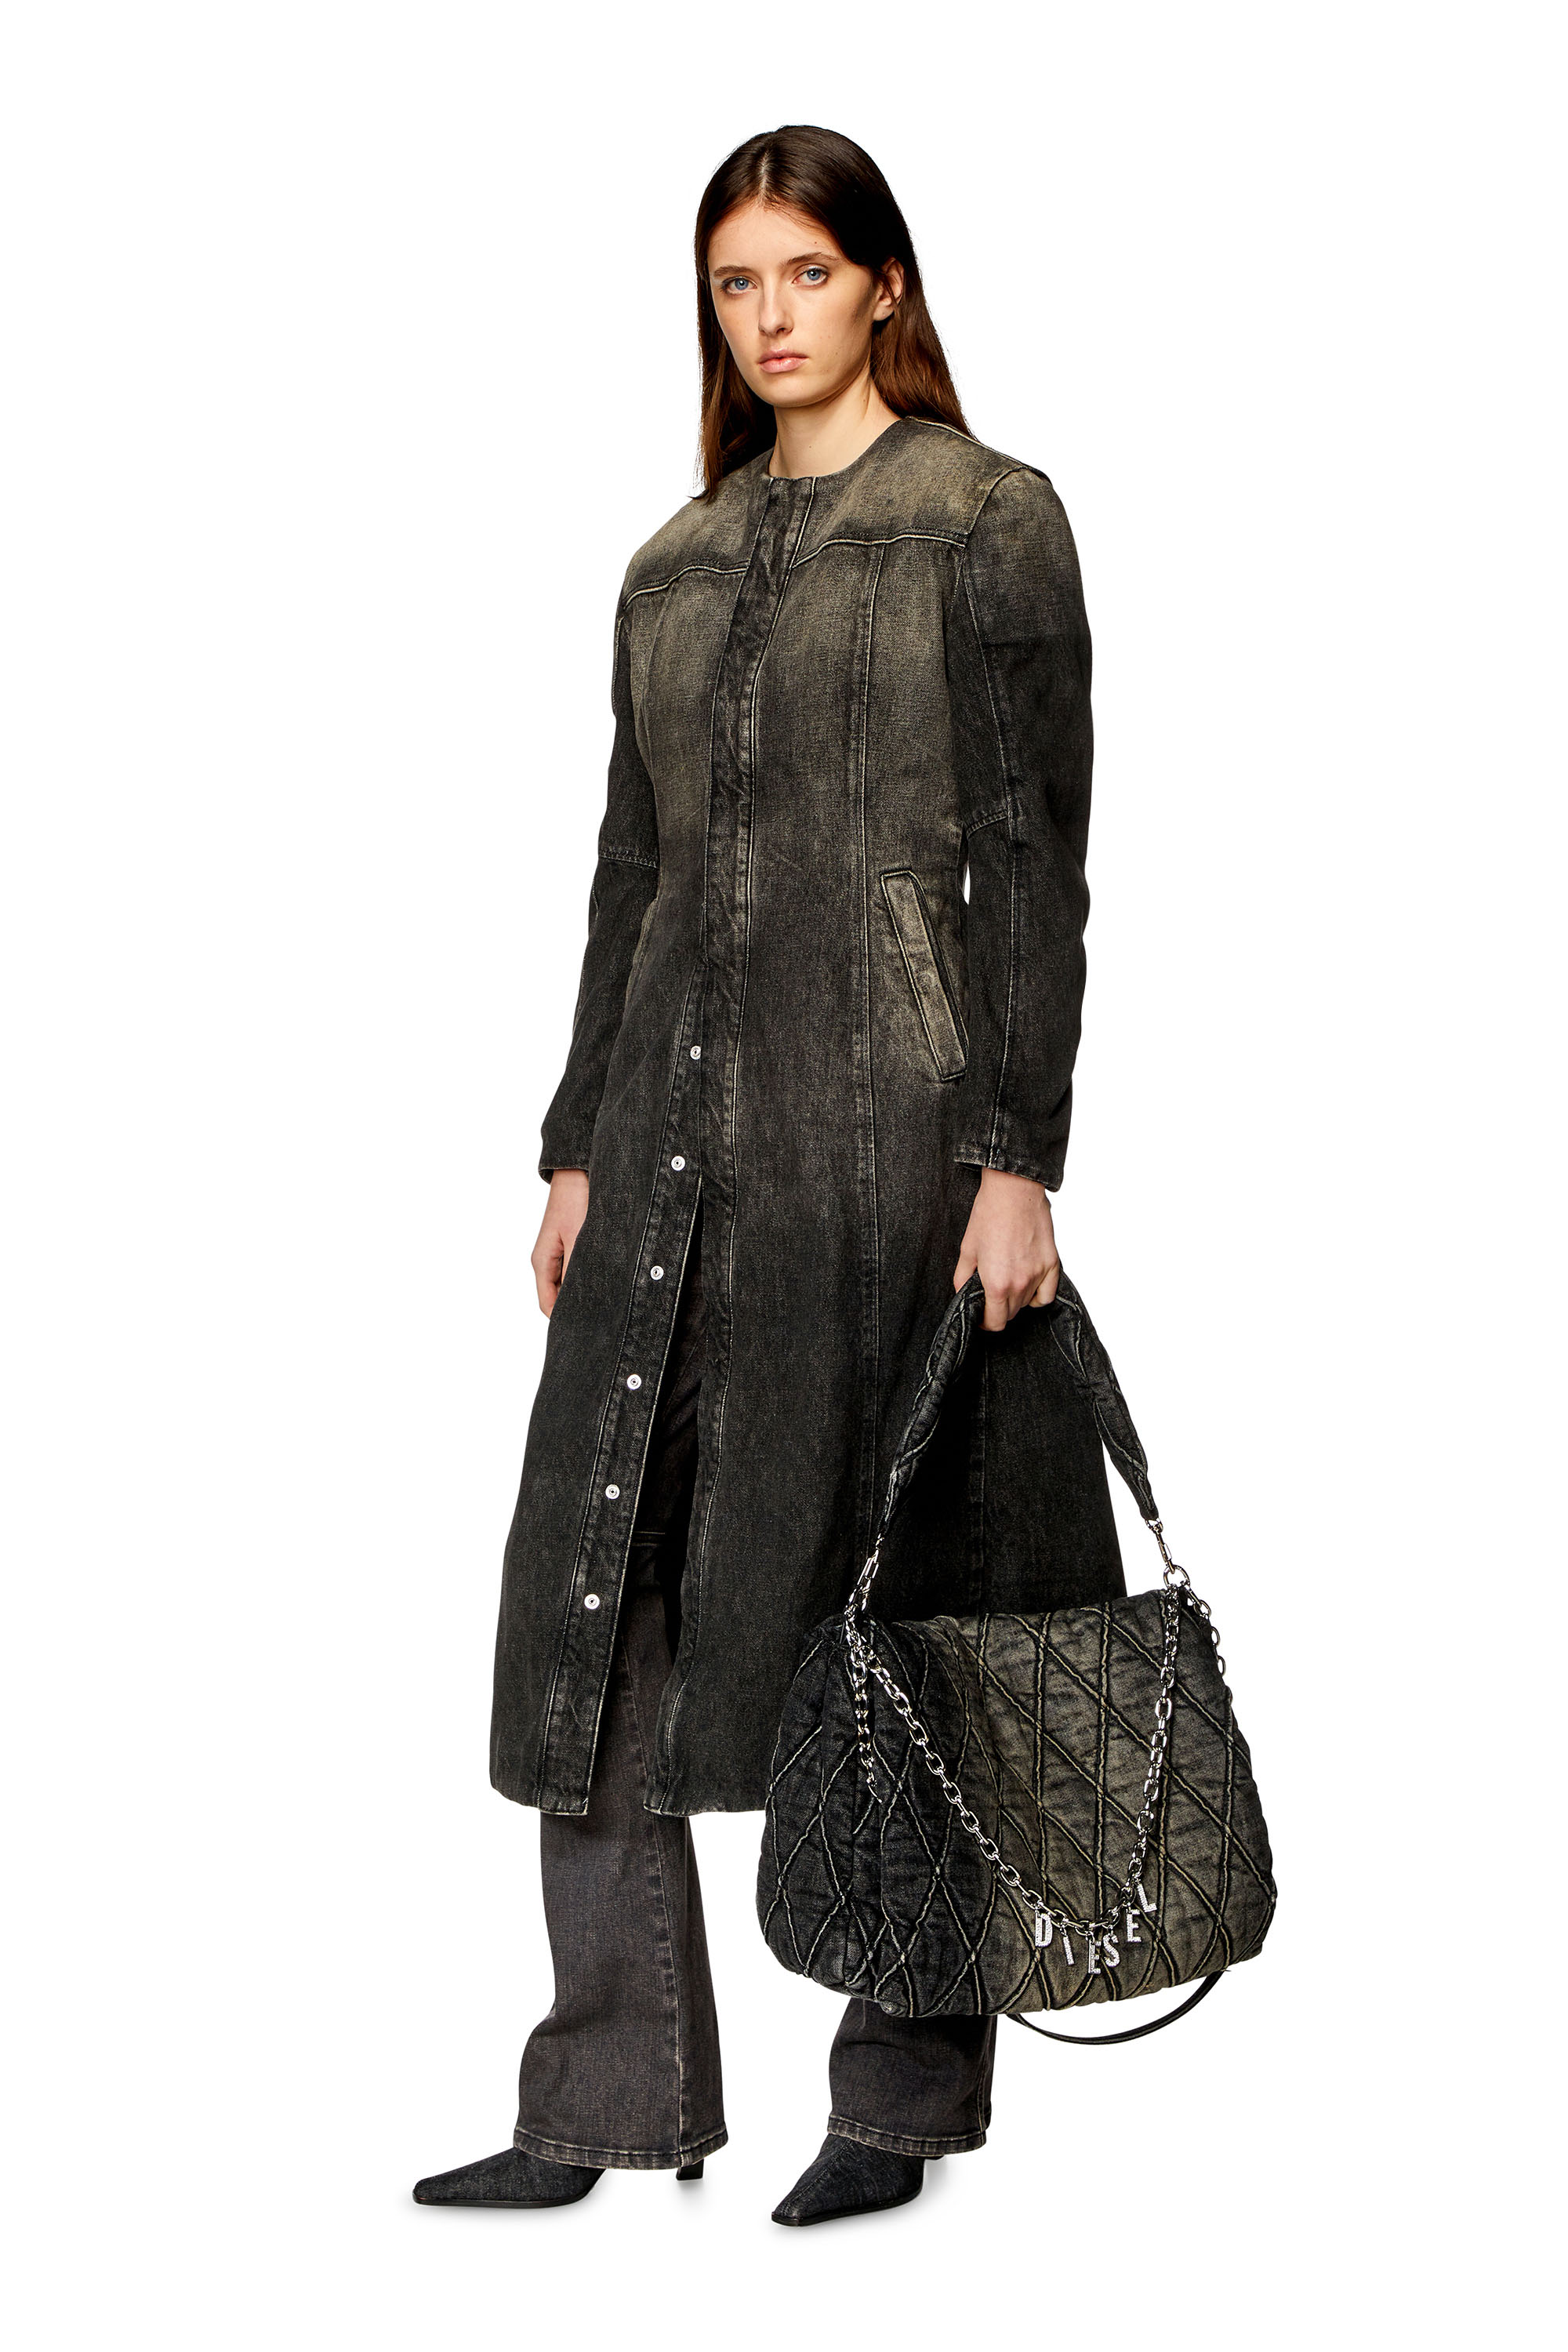 Diesel - DE-SY-S, Woman Denim coat in cotton and hemp in Black - Image 1